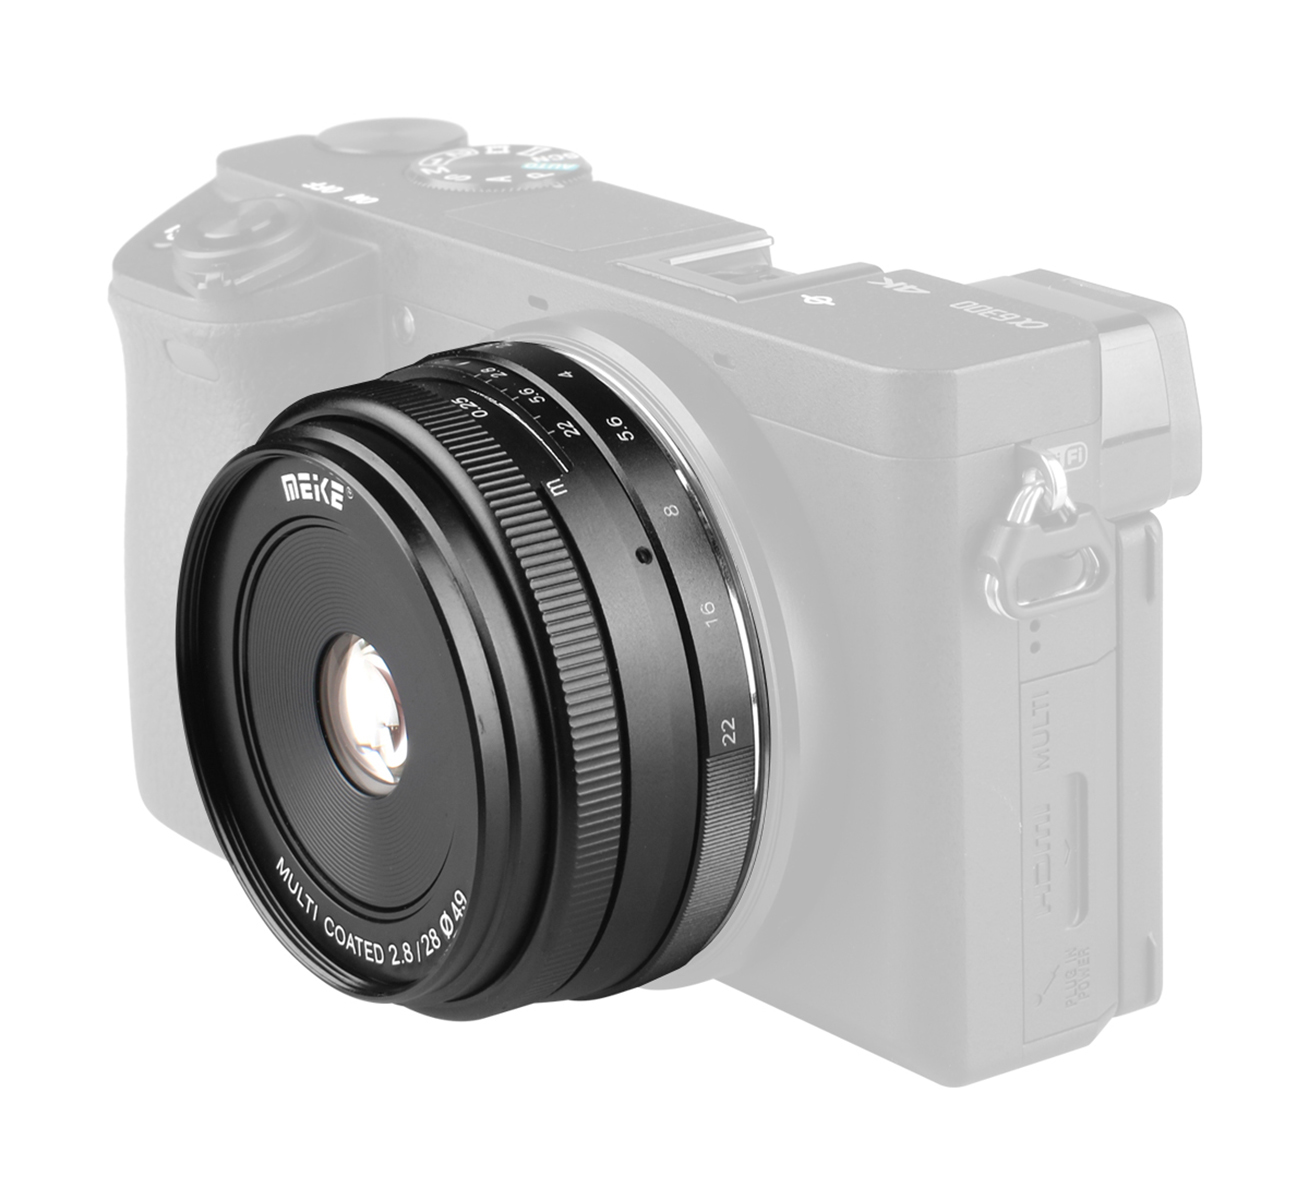 Meike 28mm F2.8 Objektiv multicoated für Fujifilm X-Mount - B-Ware